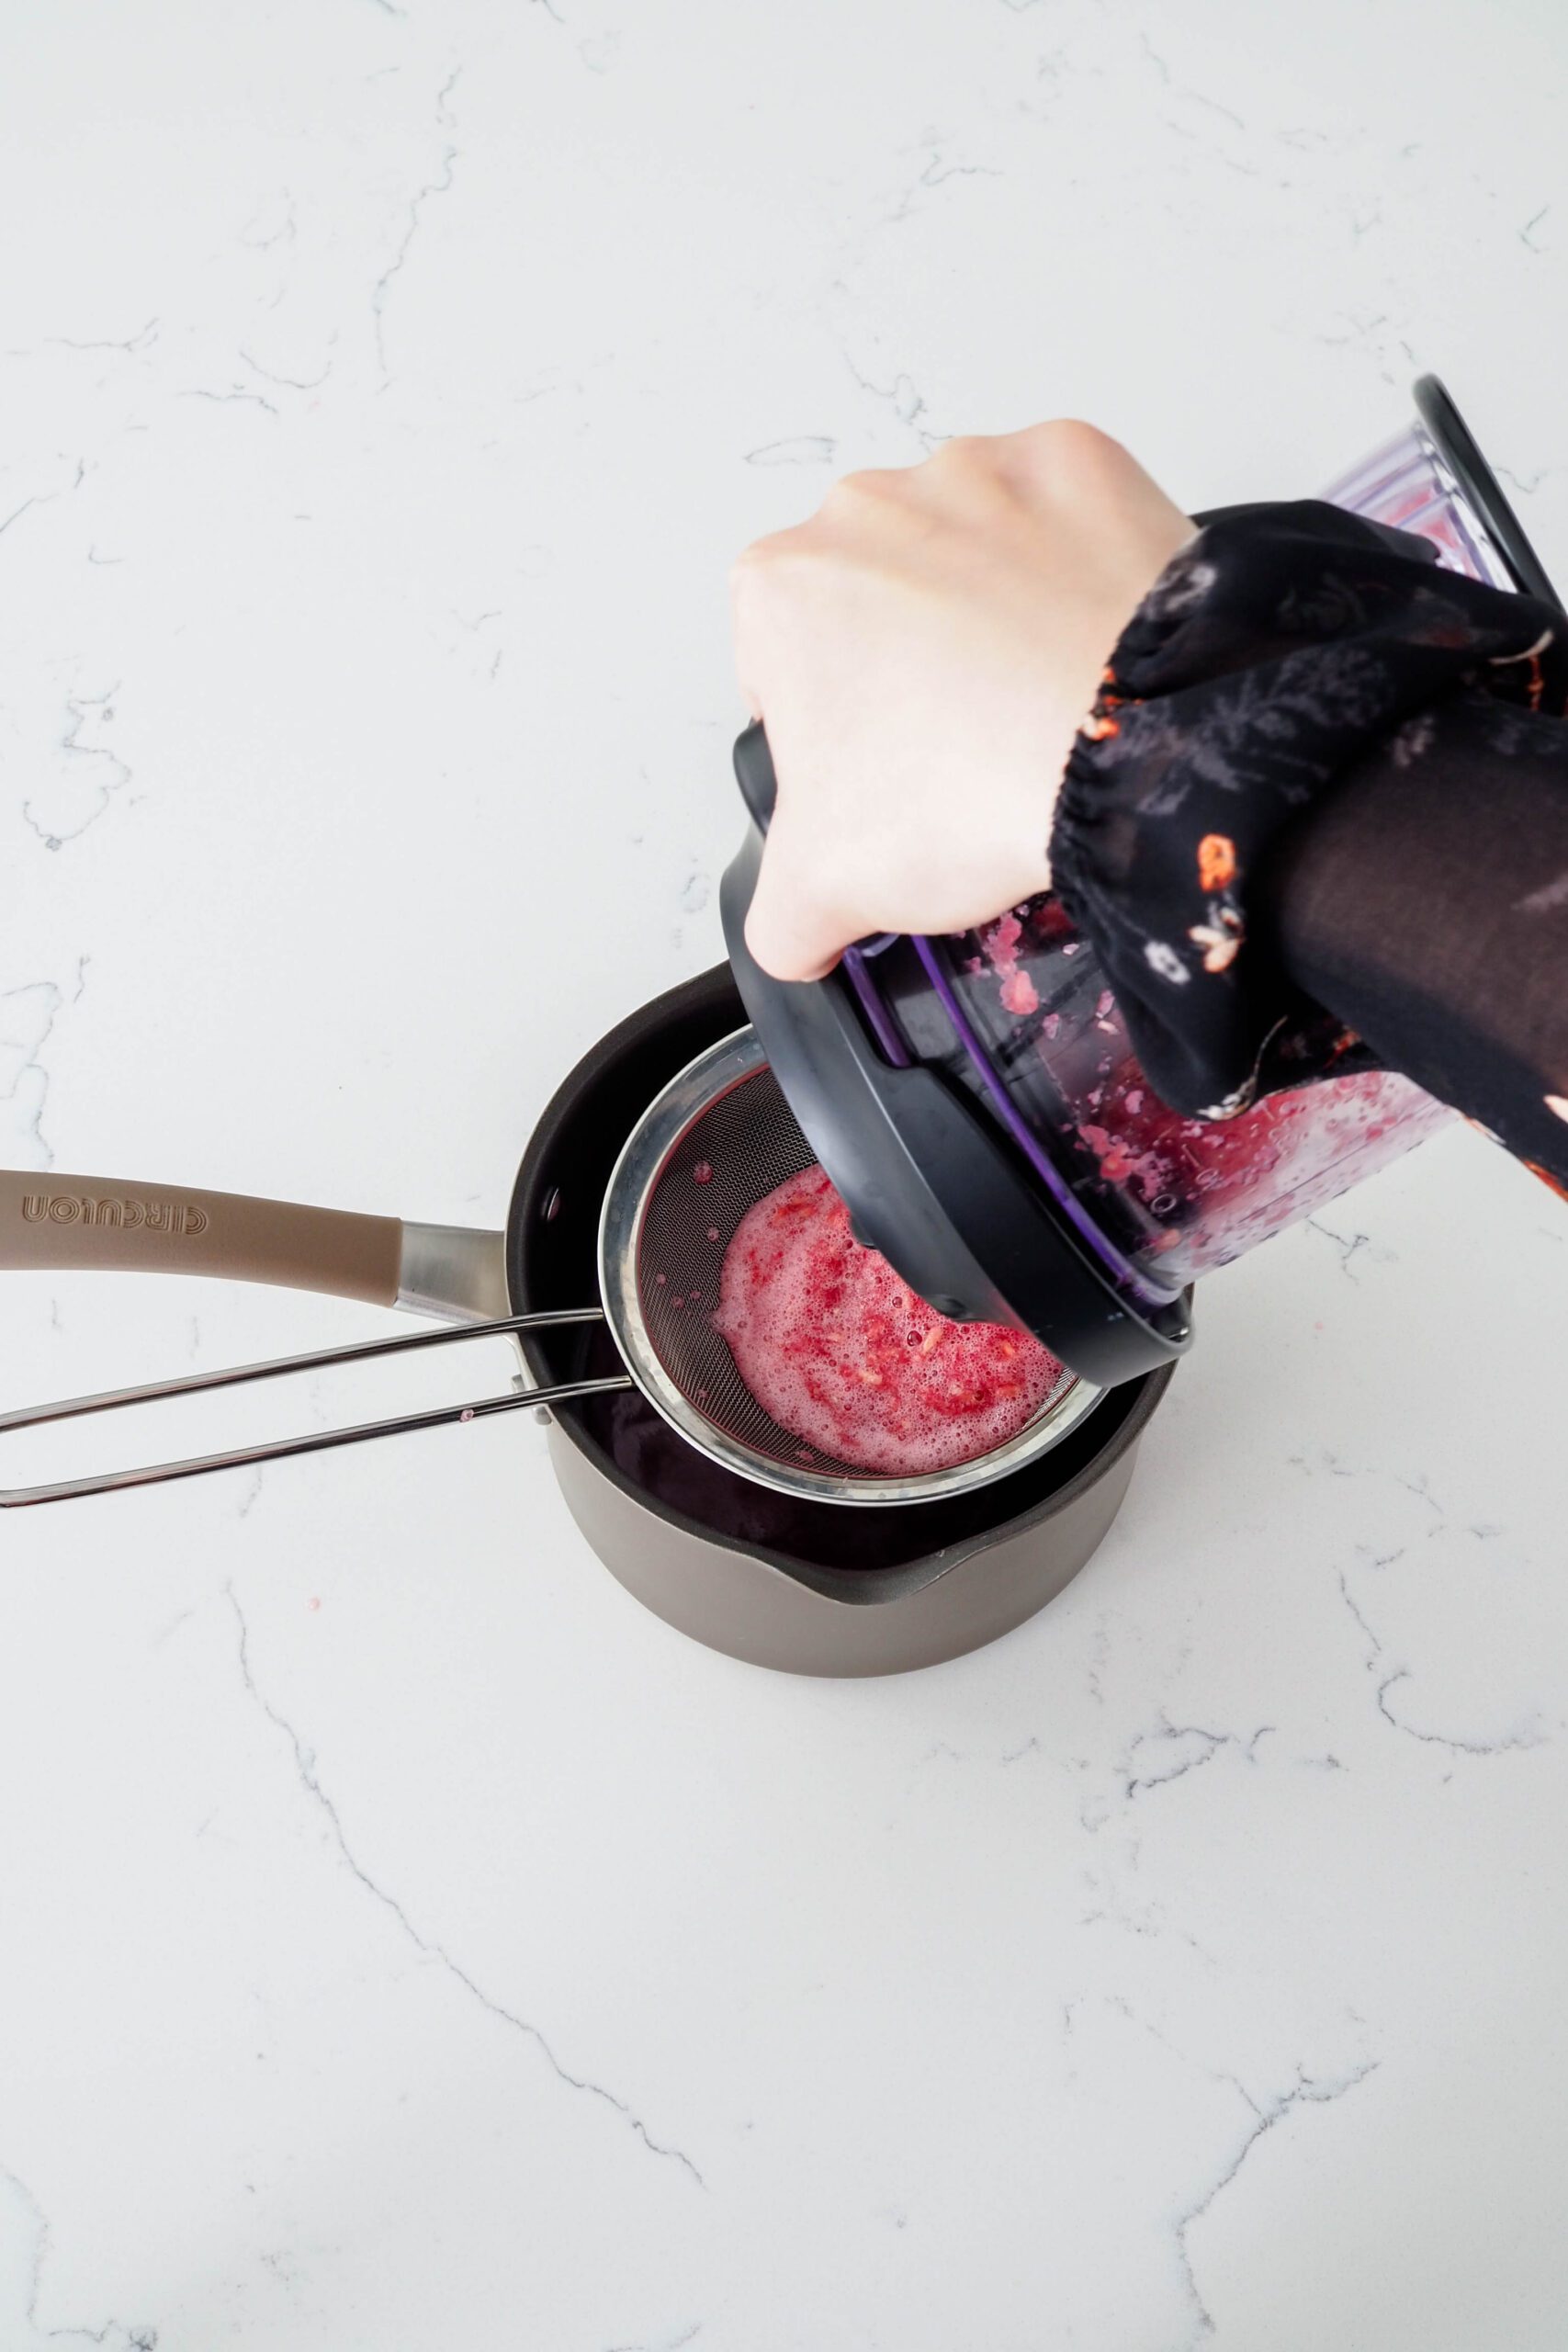 A hand pours pomegranate juice into a fine mesh strainer over a pot.